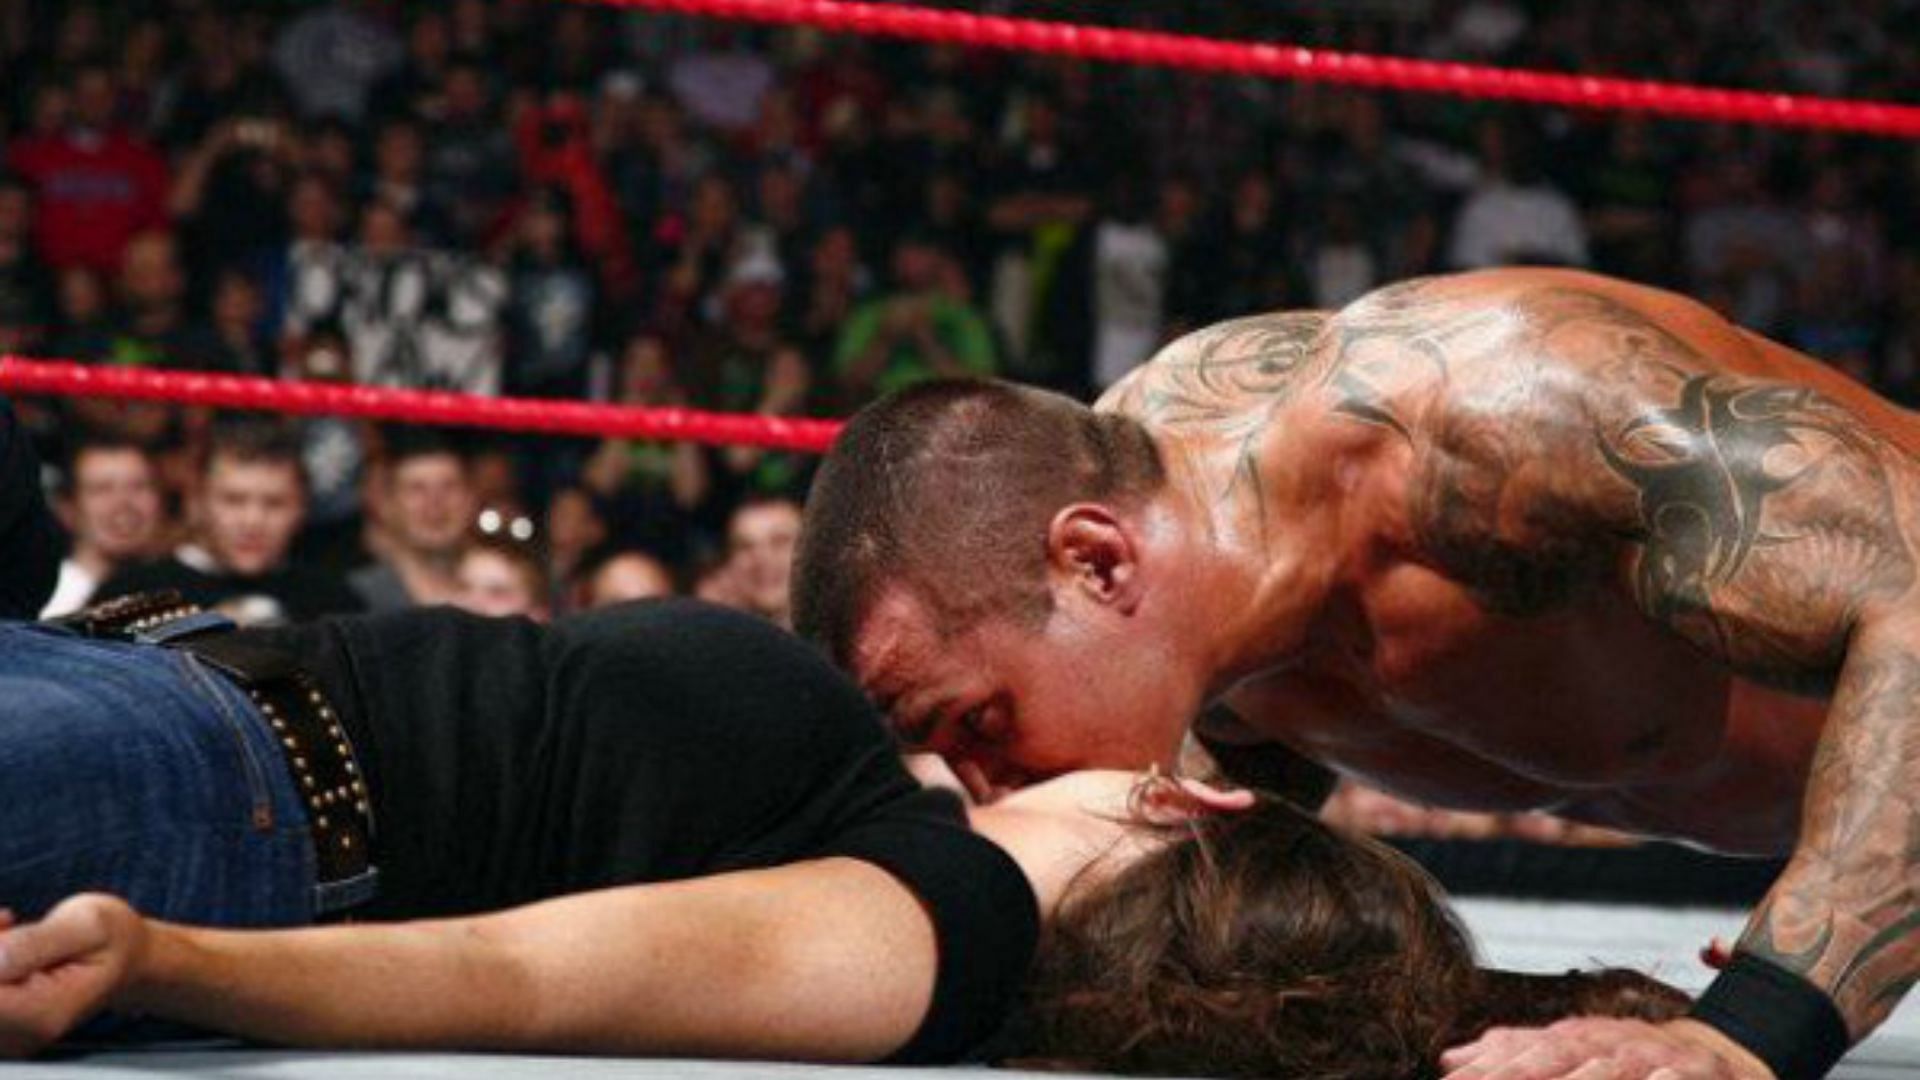 Randy Orton had some intense segments prior his WrestleMania 25 performance